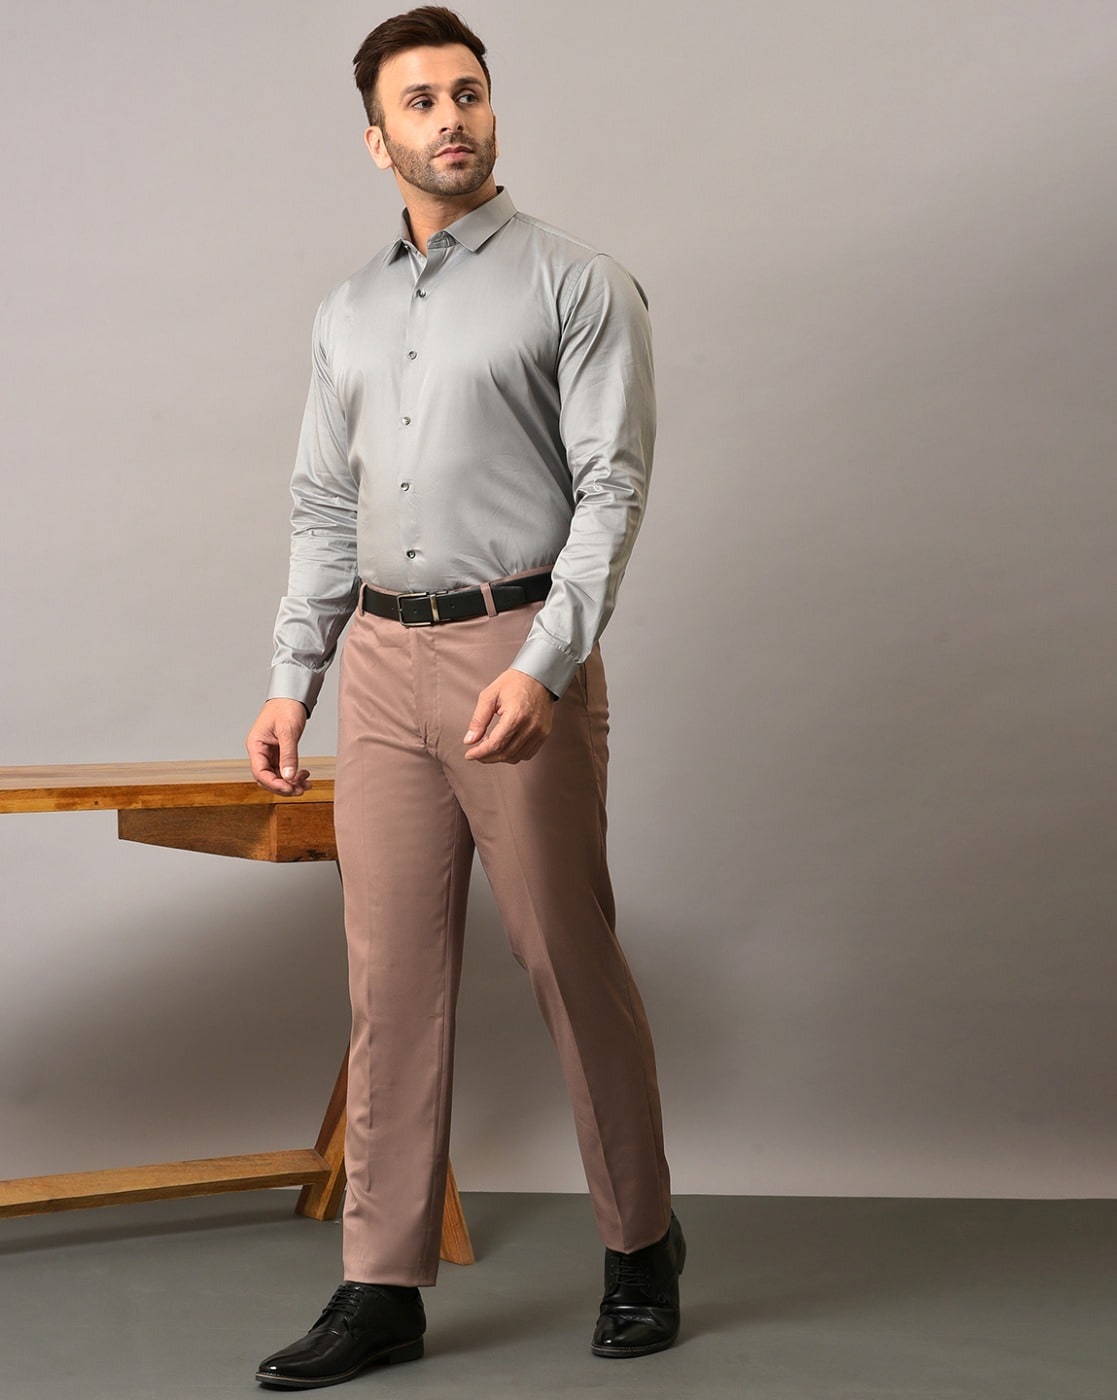 Buy KEDY Formal Trouser for Men -Comfortable Pant for Men - Trouser for  Gents Trouser for Gents - Office Look Bottoms for Boys, Men or Gents - Soft  Pant for Men (28,